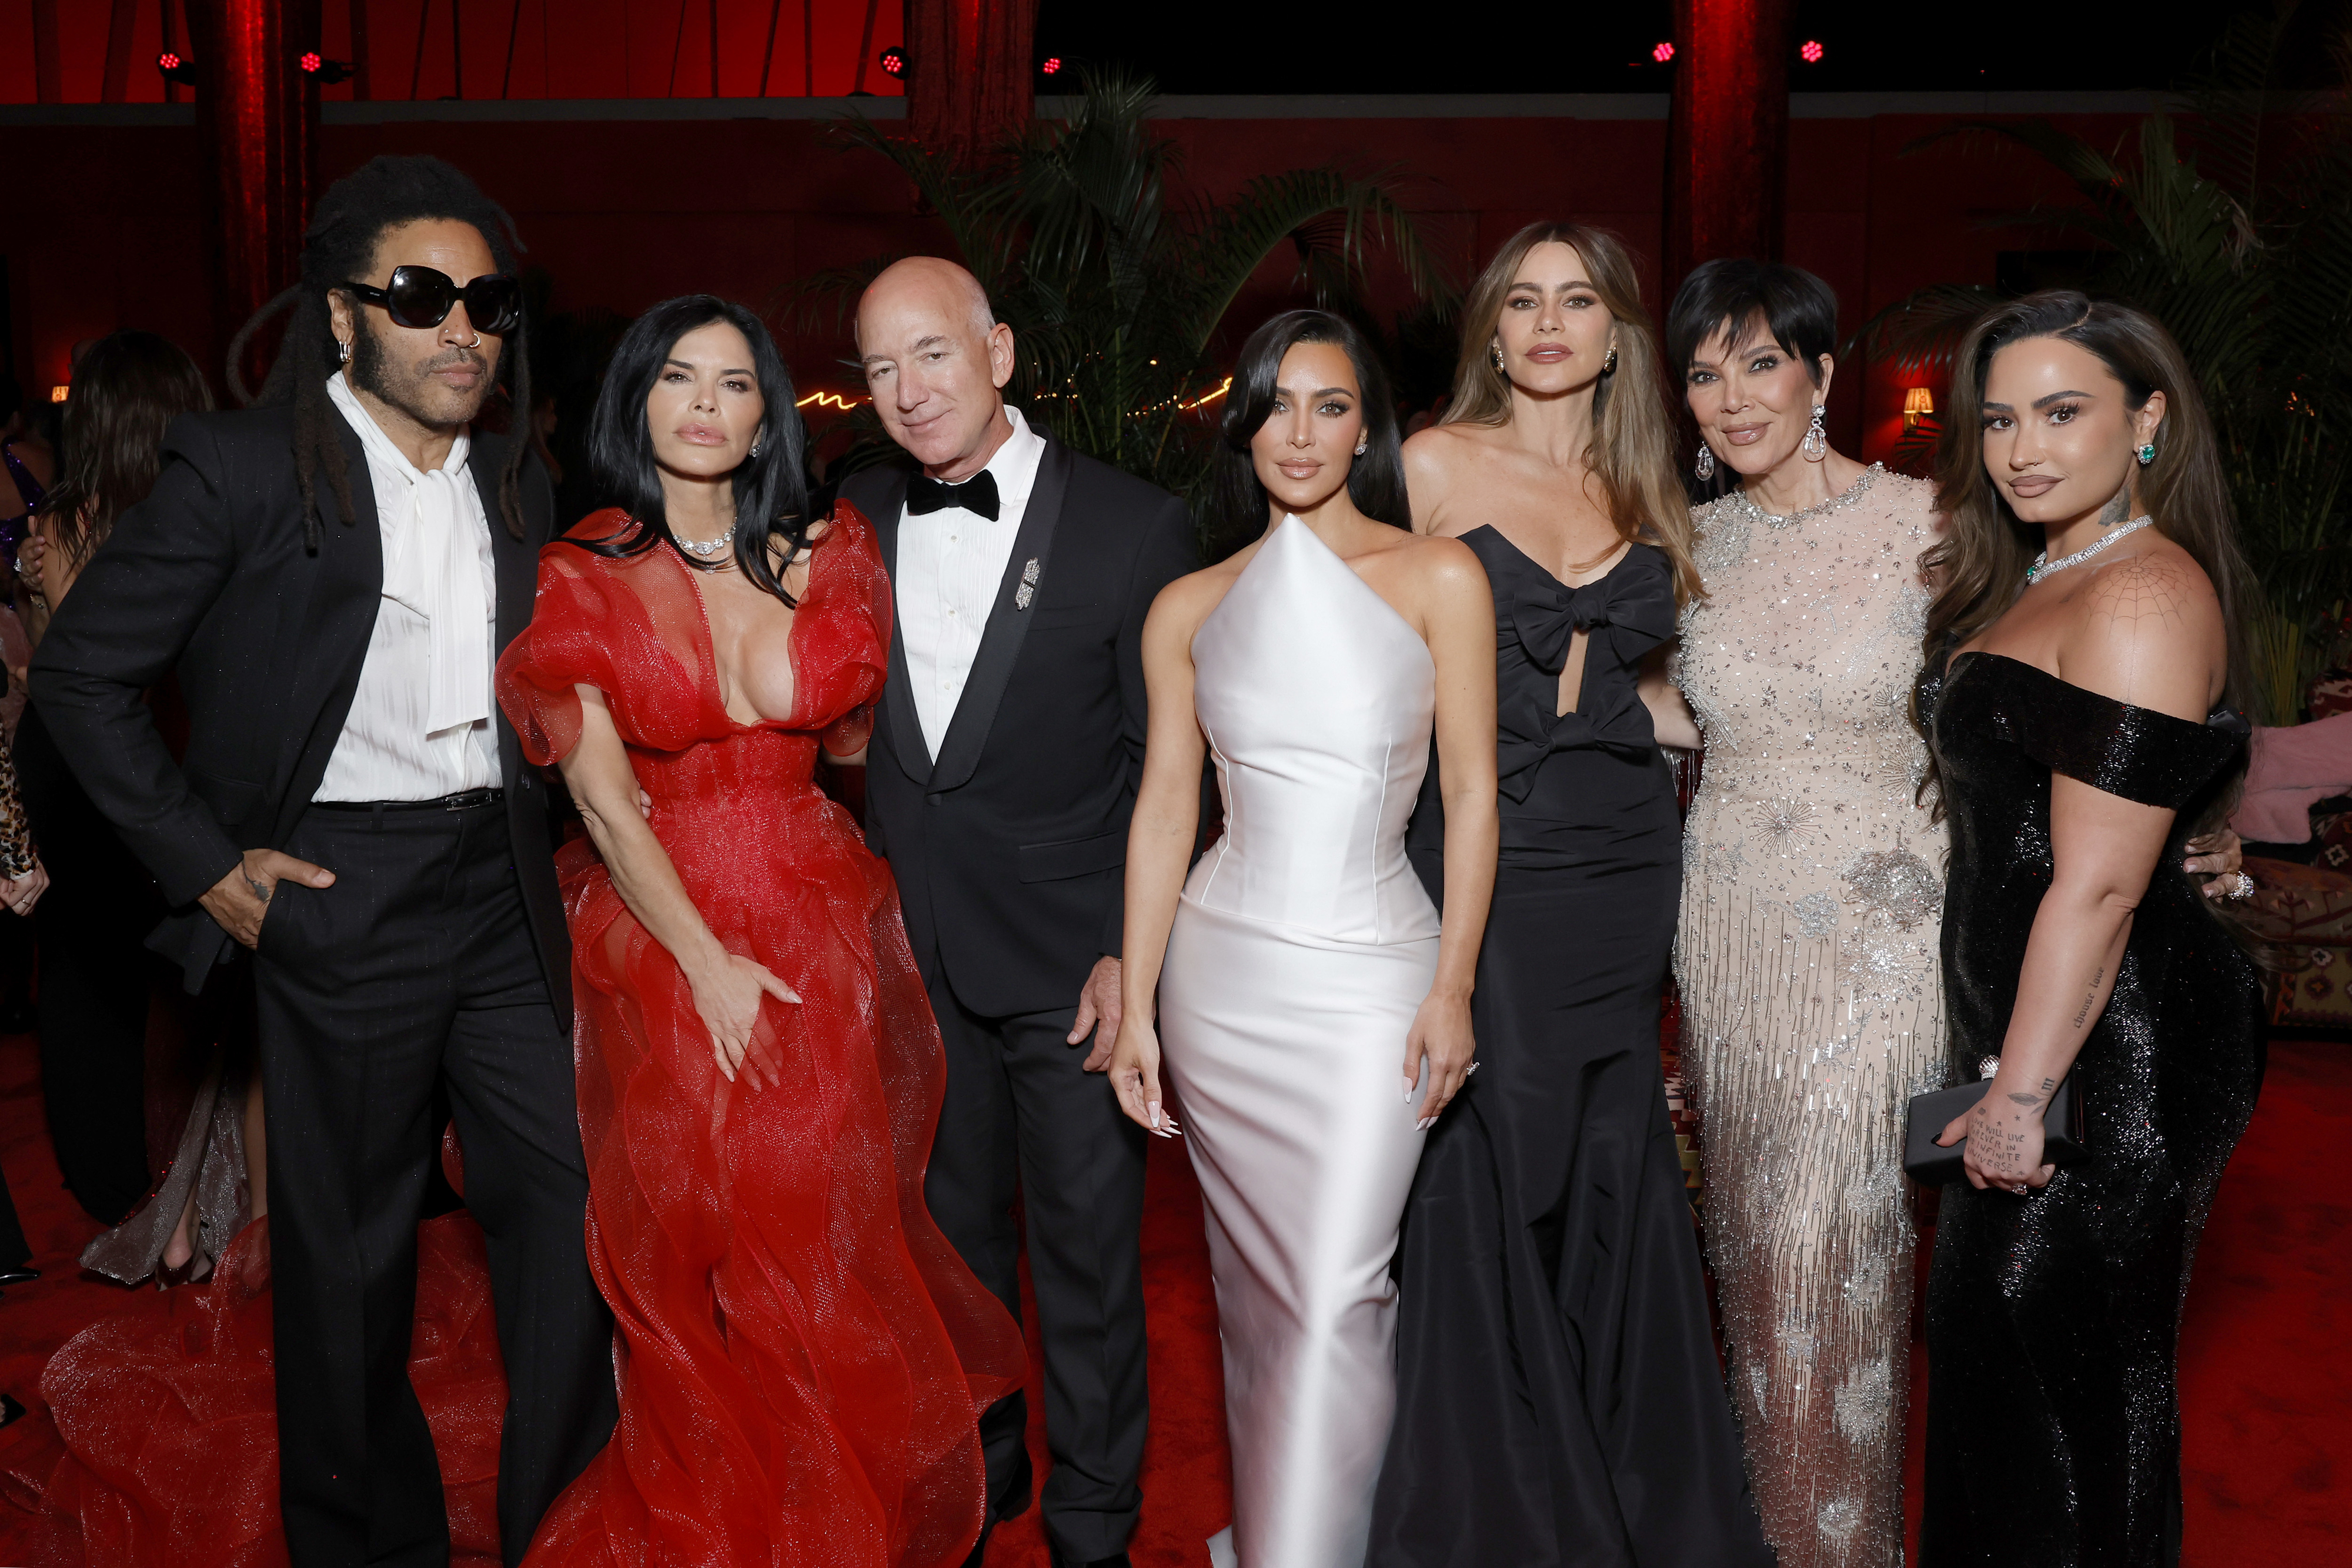 Kim Kardashian Unedited Oscars Photo Sparks Discourse